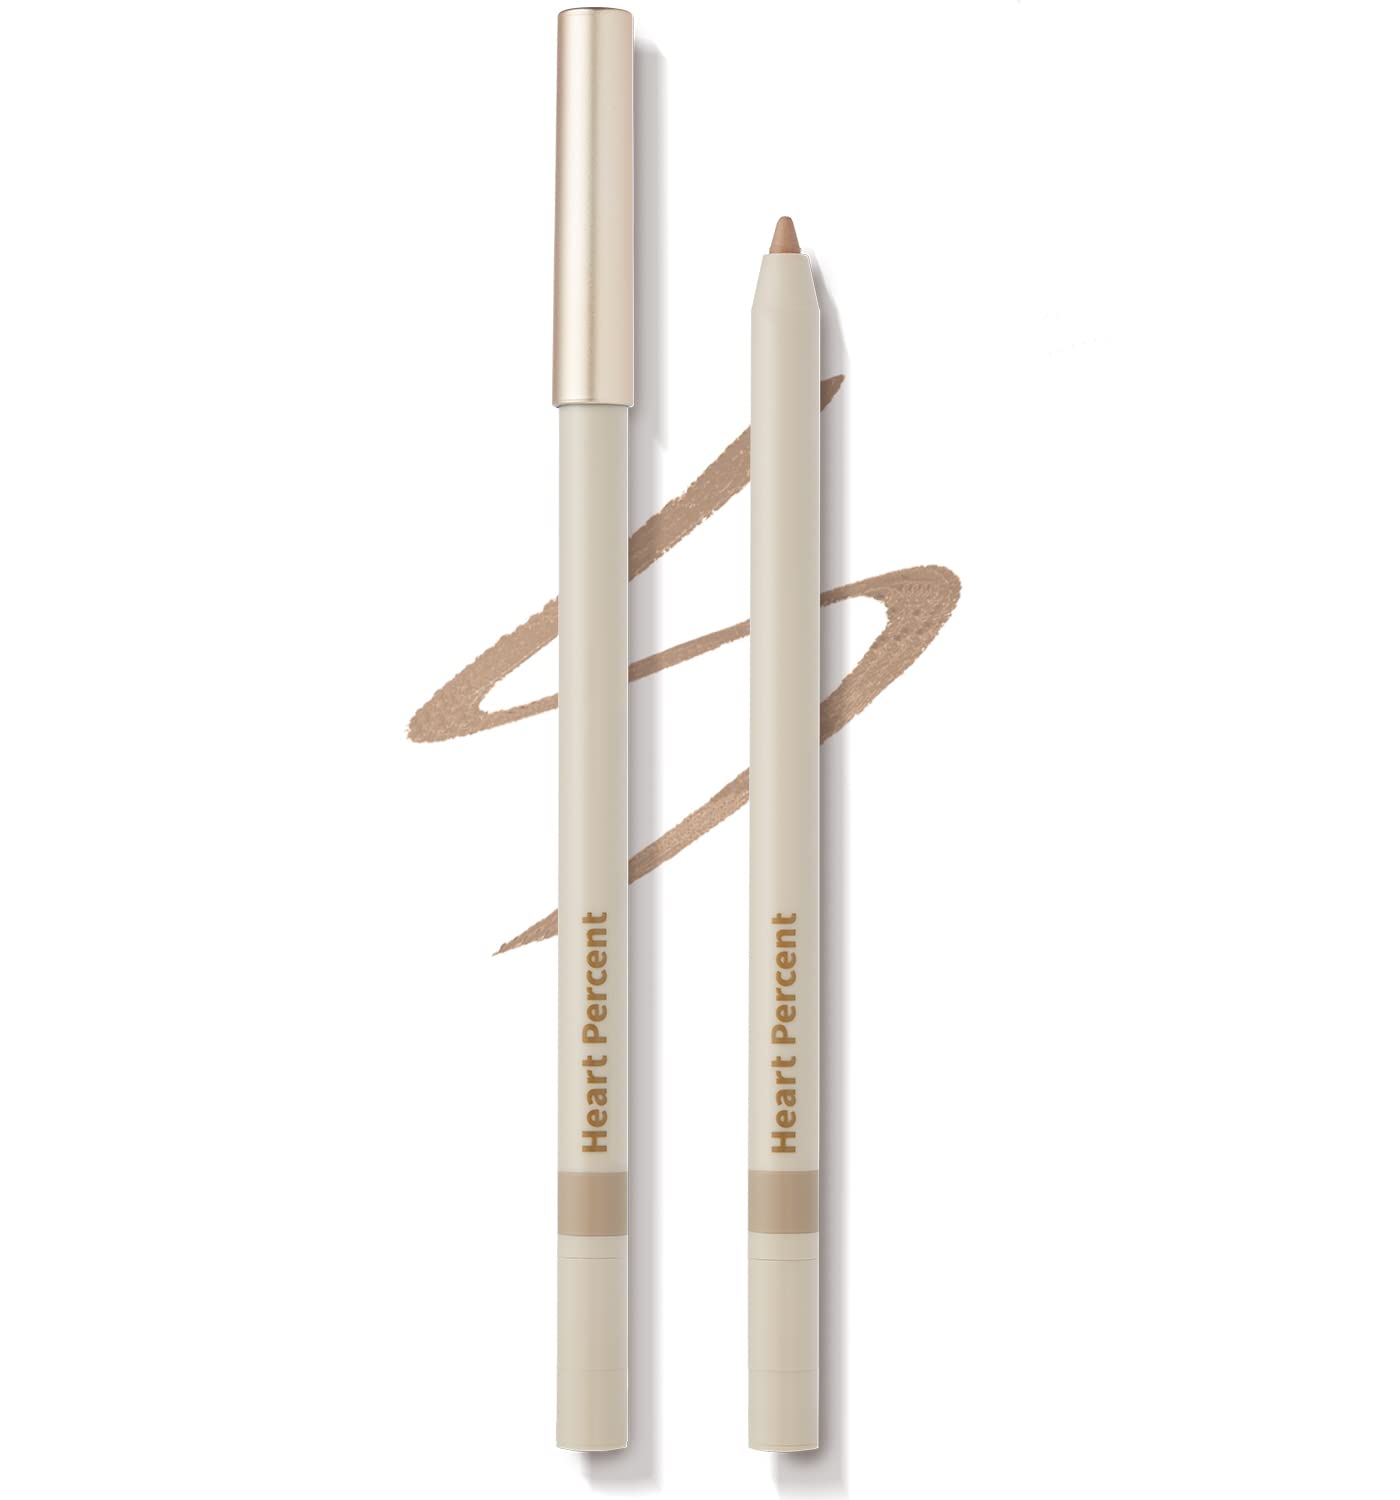 Heart Percent Dote On Mood Gel Eyeliner Pencil, Long-Lasting Waterproof Smudge Proof Smooth Retractable Eye Liner Pencil with Built-In Sharpener (04. Gray Beige)